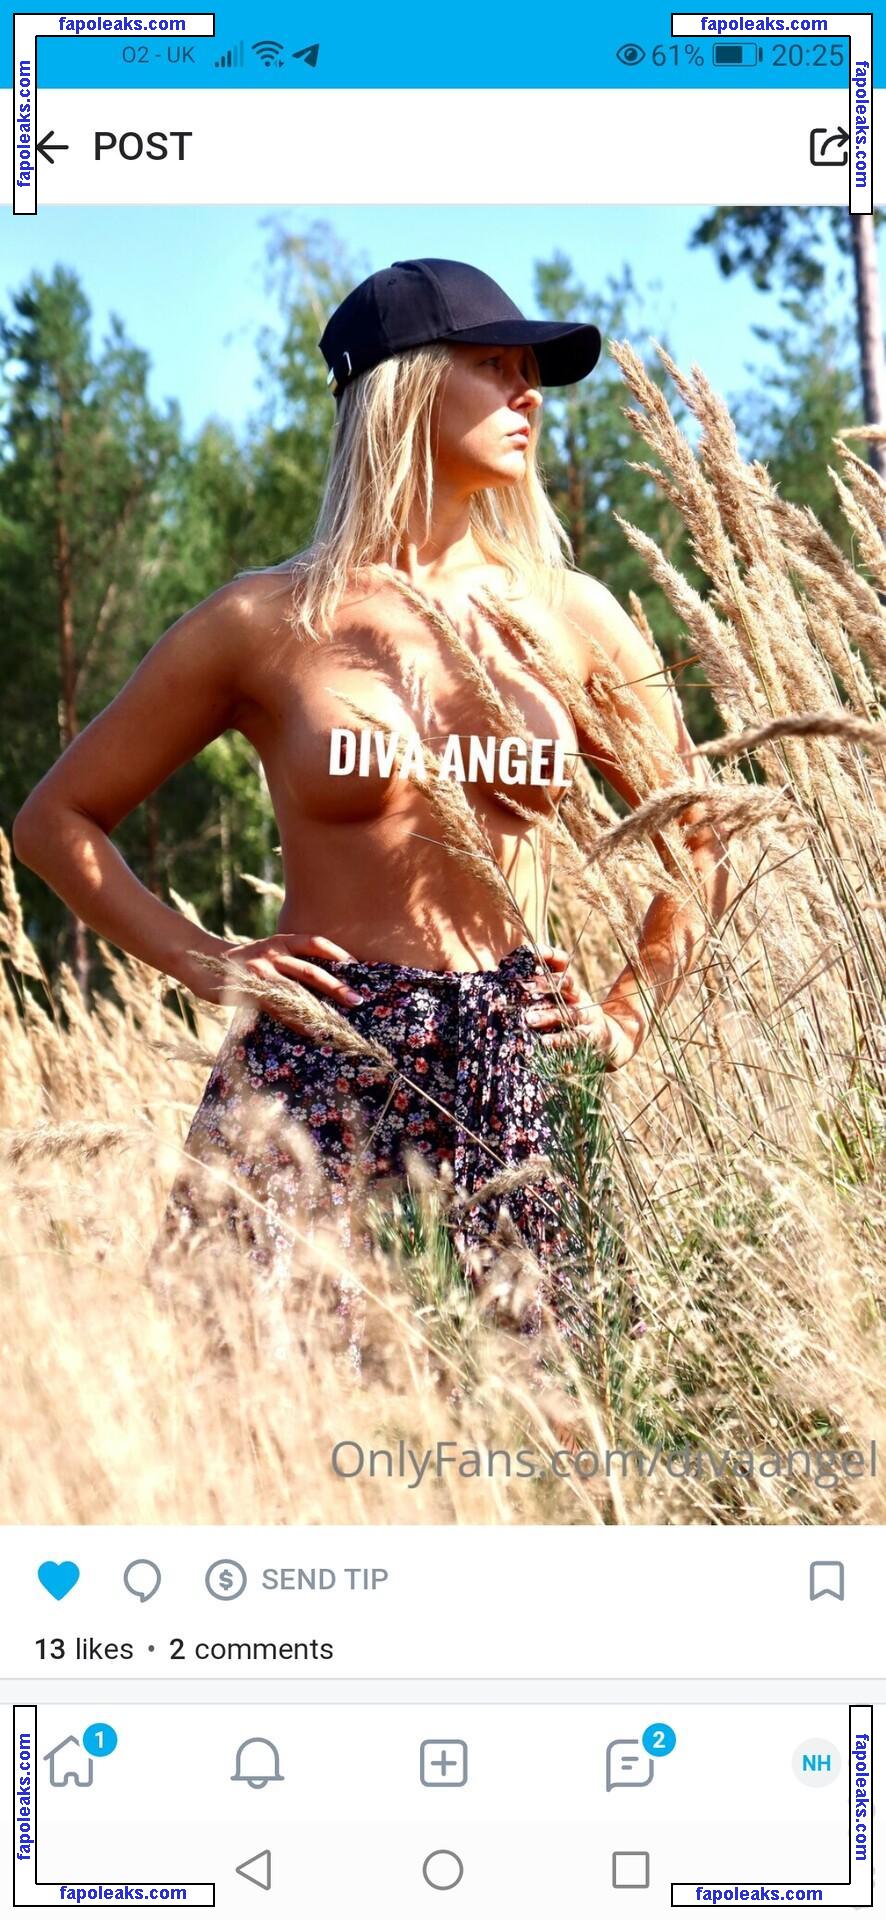 Diva Angel / diva_angel_ / divaangel nude photo #0001 from OnlyFans